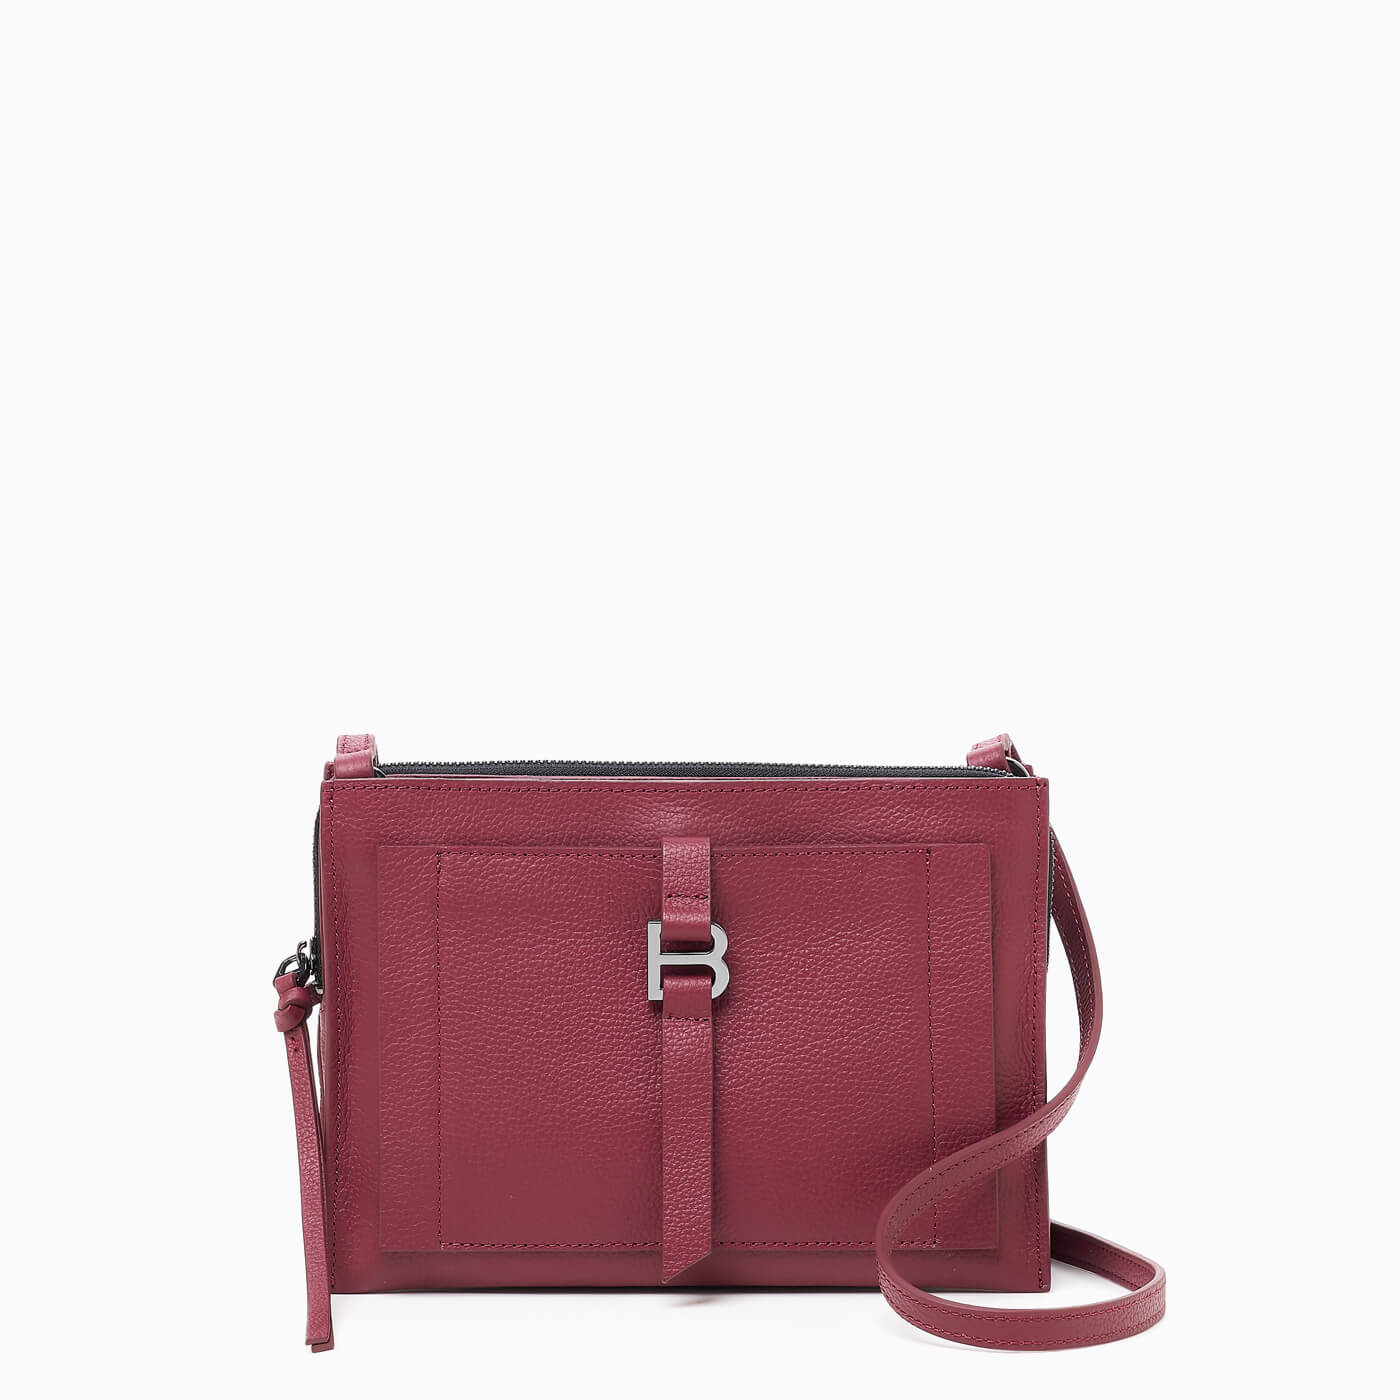 Shop Designer Leather Handbags